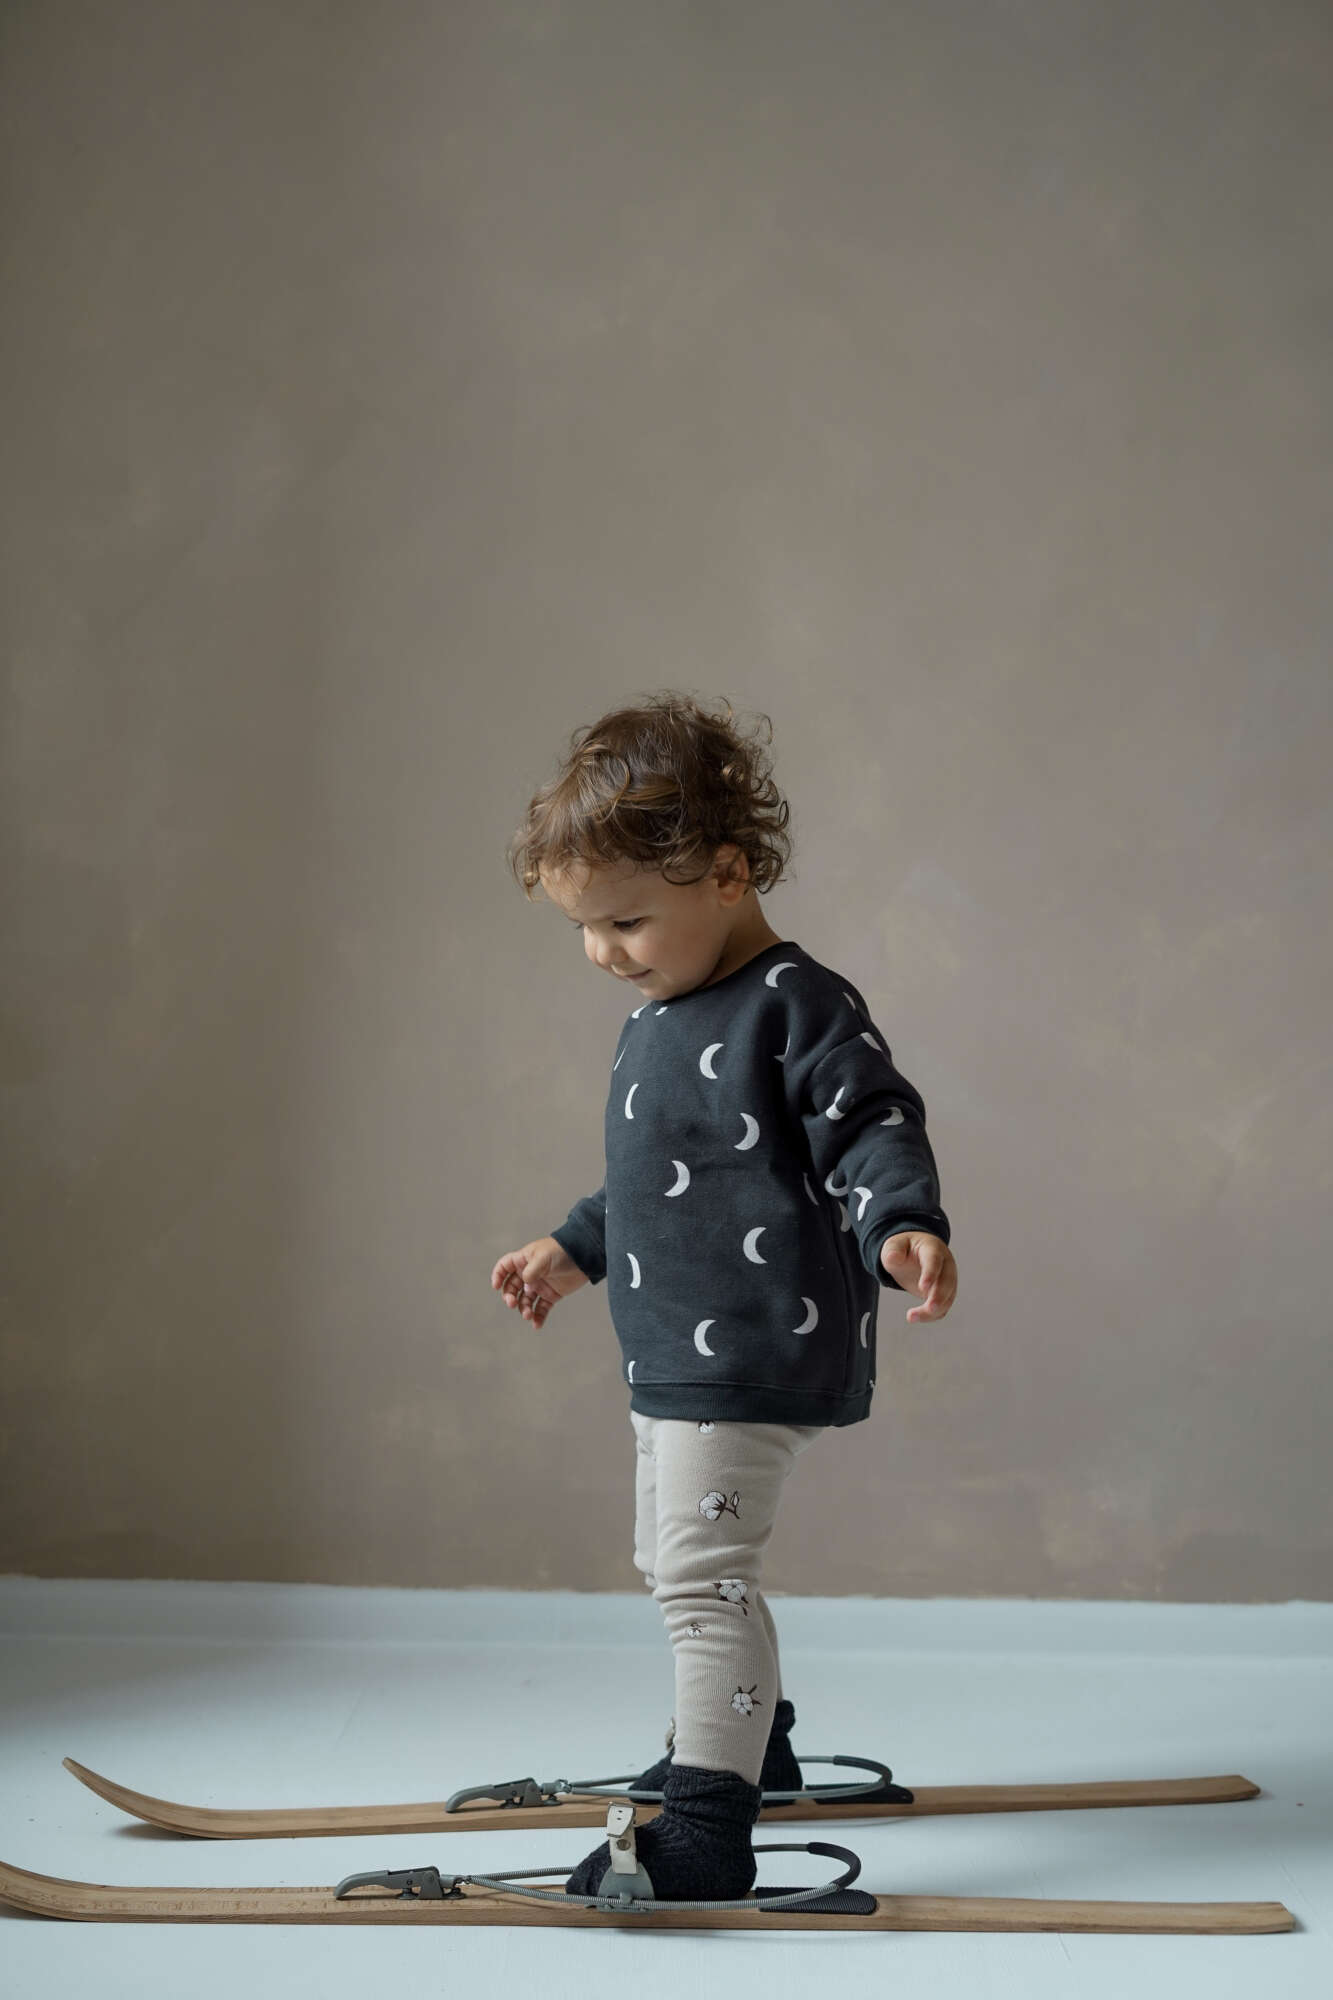 Organic Zoo Sweater - Midnight | Sweatshirt Baby | Little Onesie